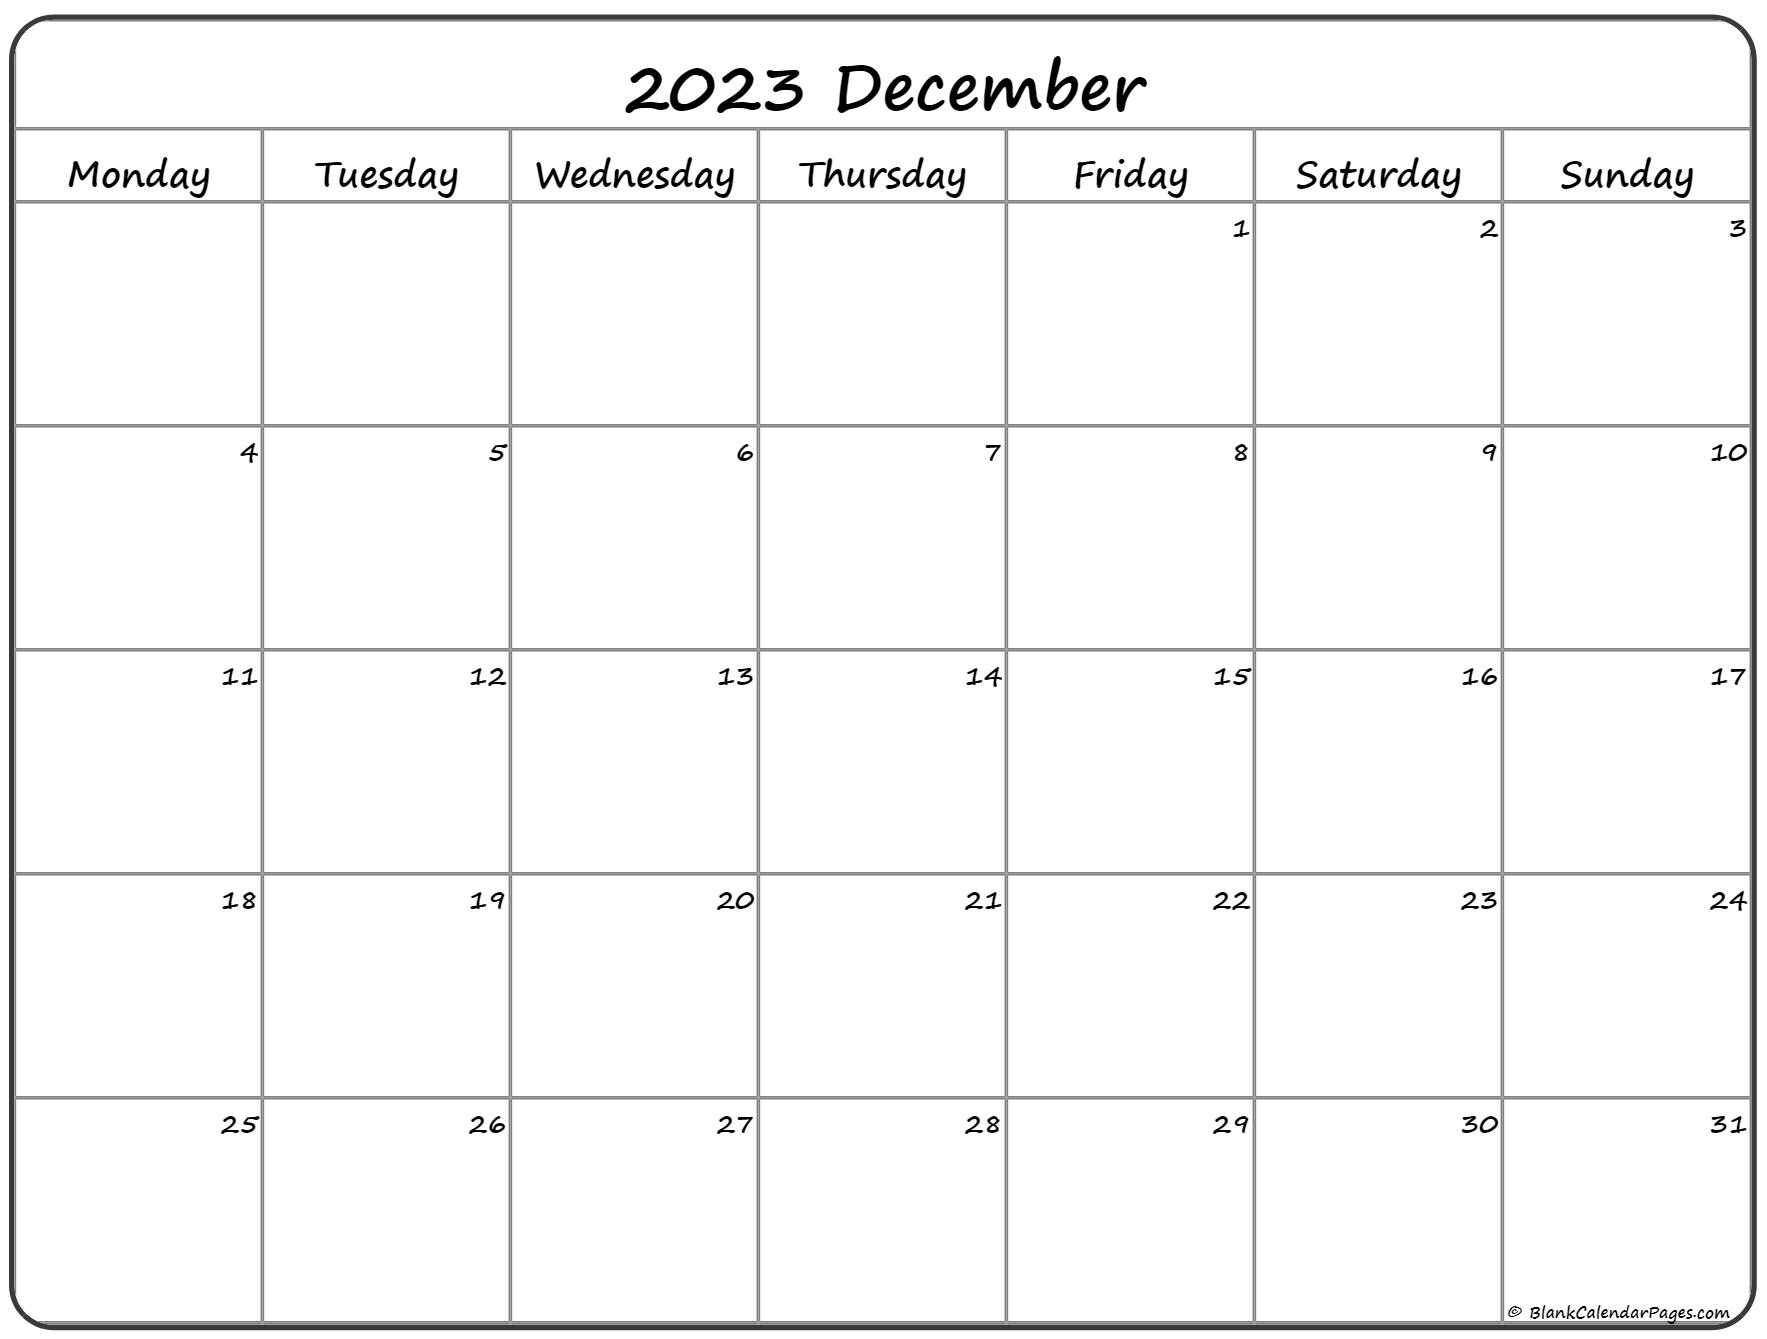 december-2023-monday-calendar-monday-to-sunday